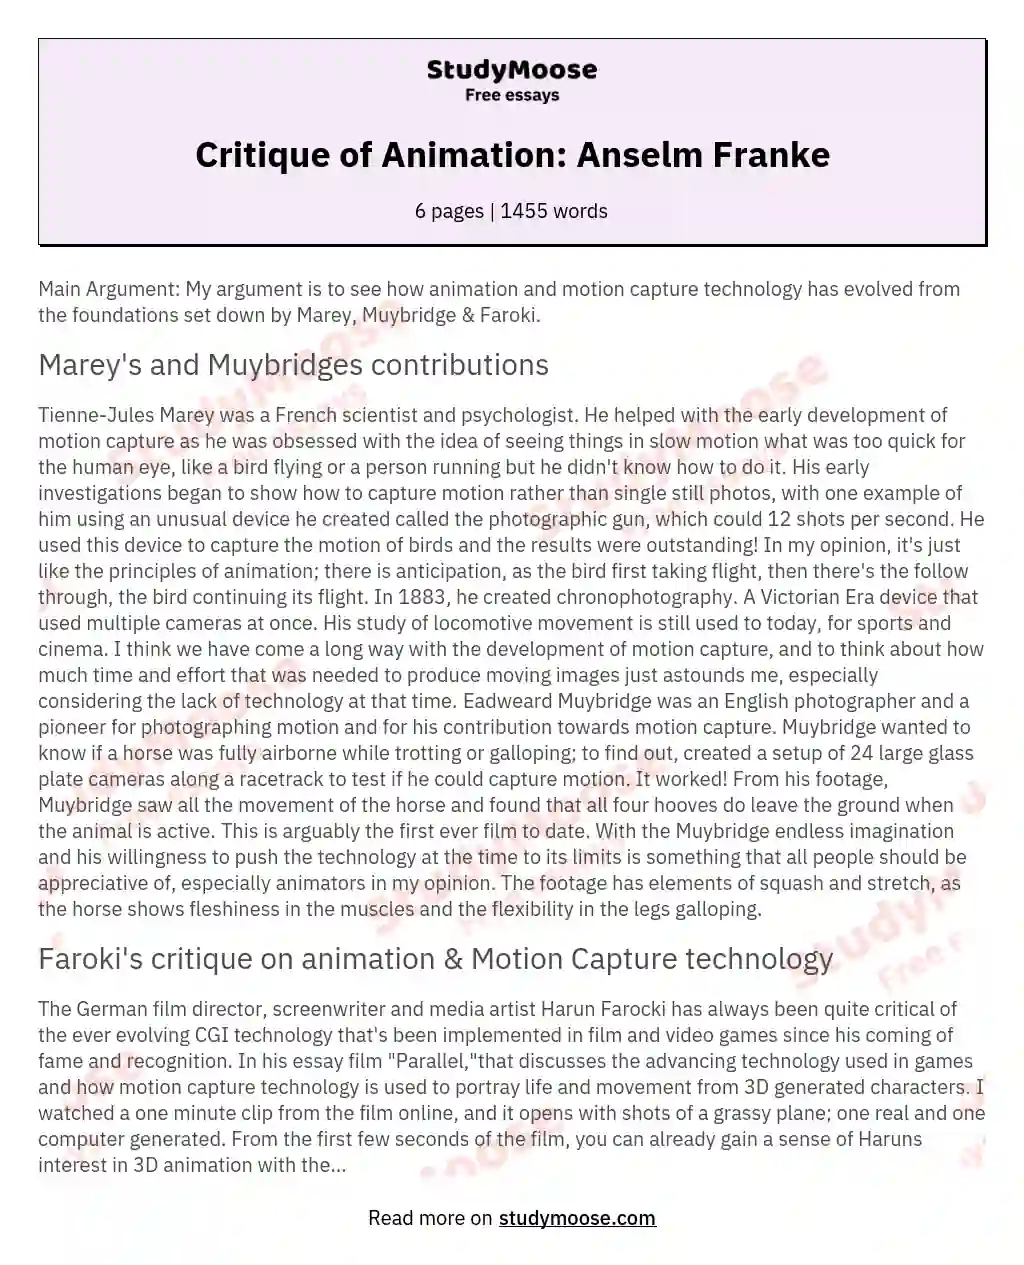 Critique of Animation: Anselm Franke essay